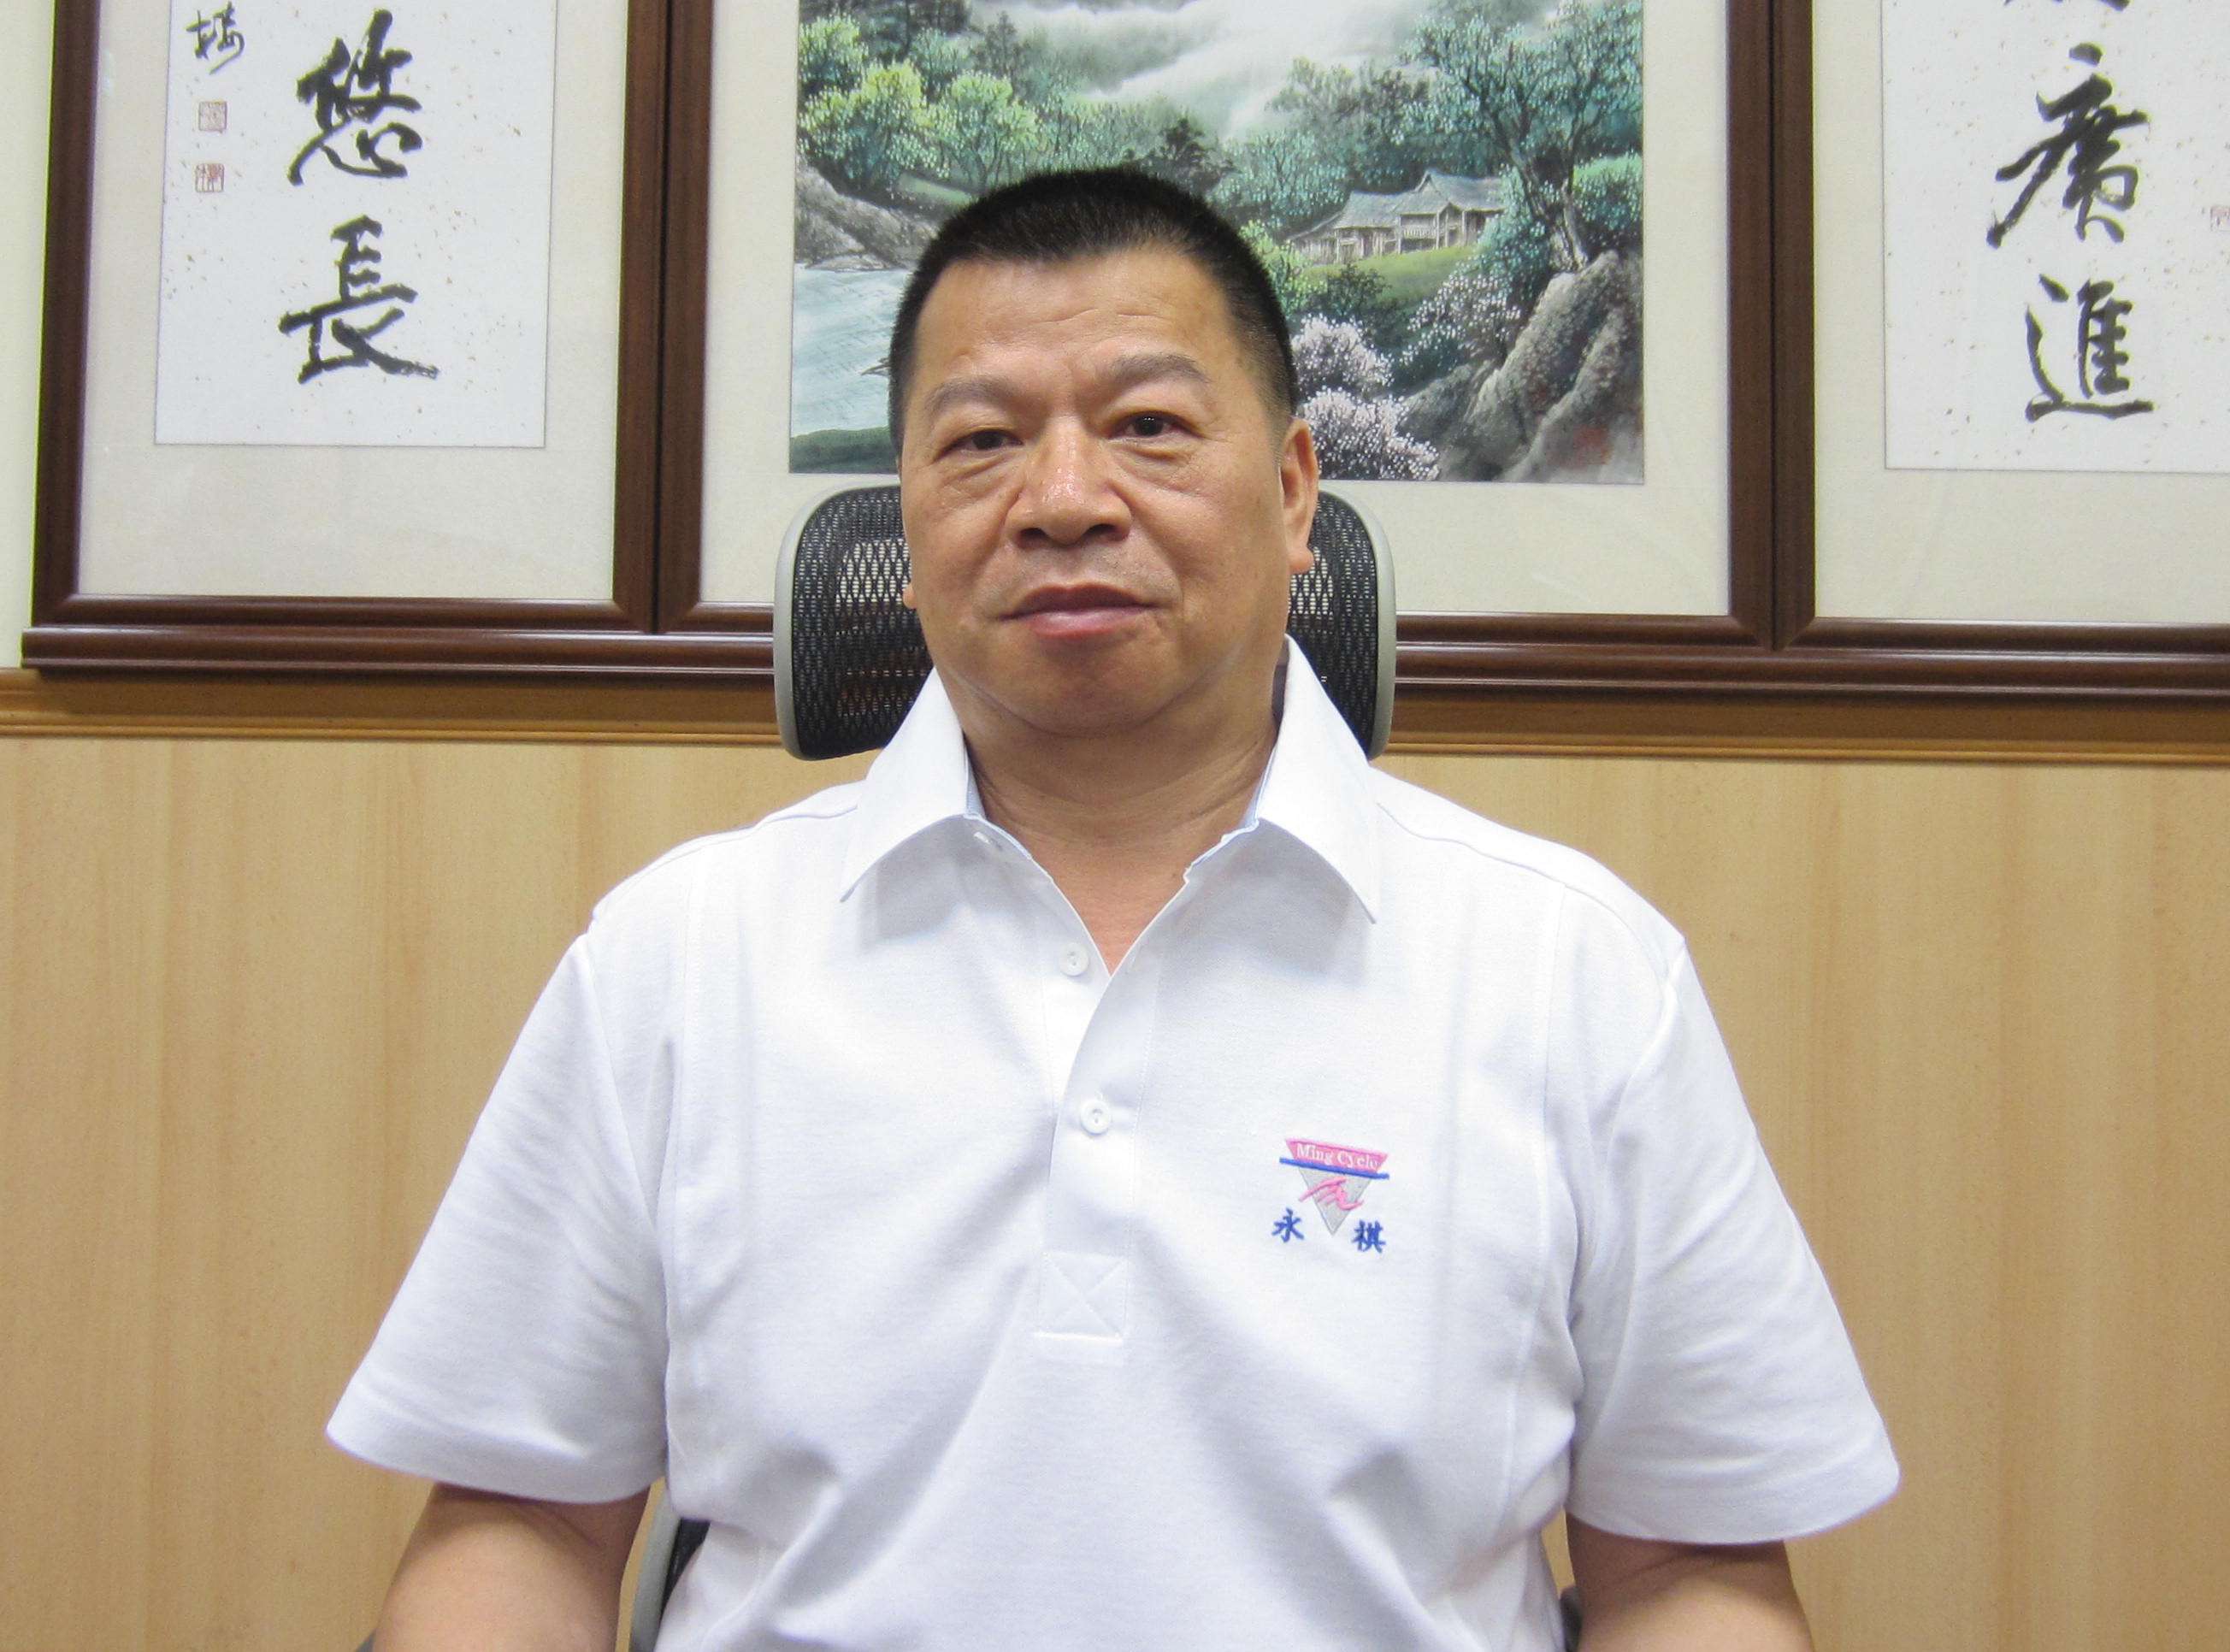 Chang Tai-shan, president